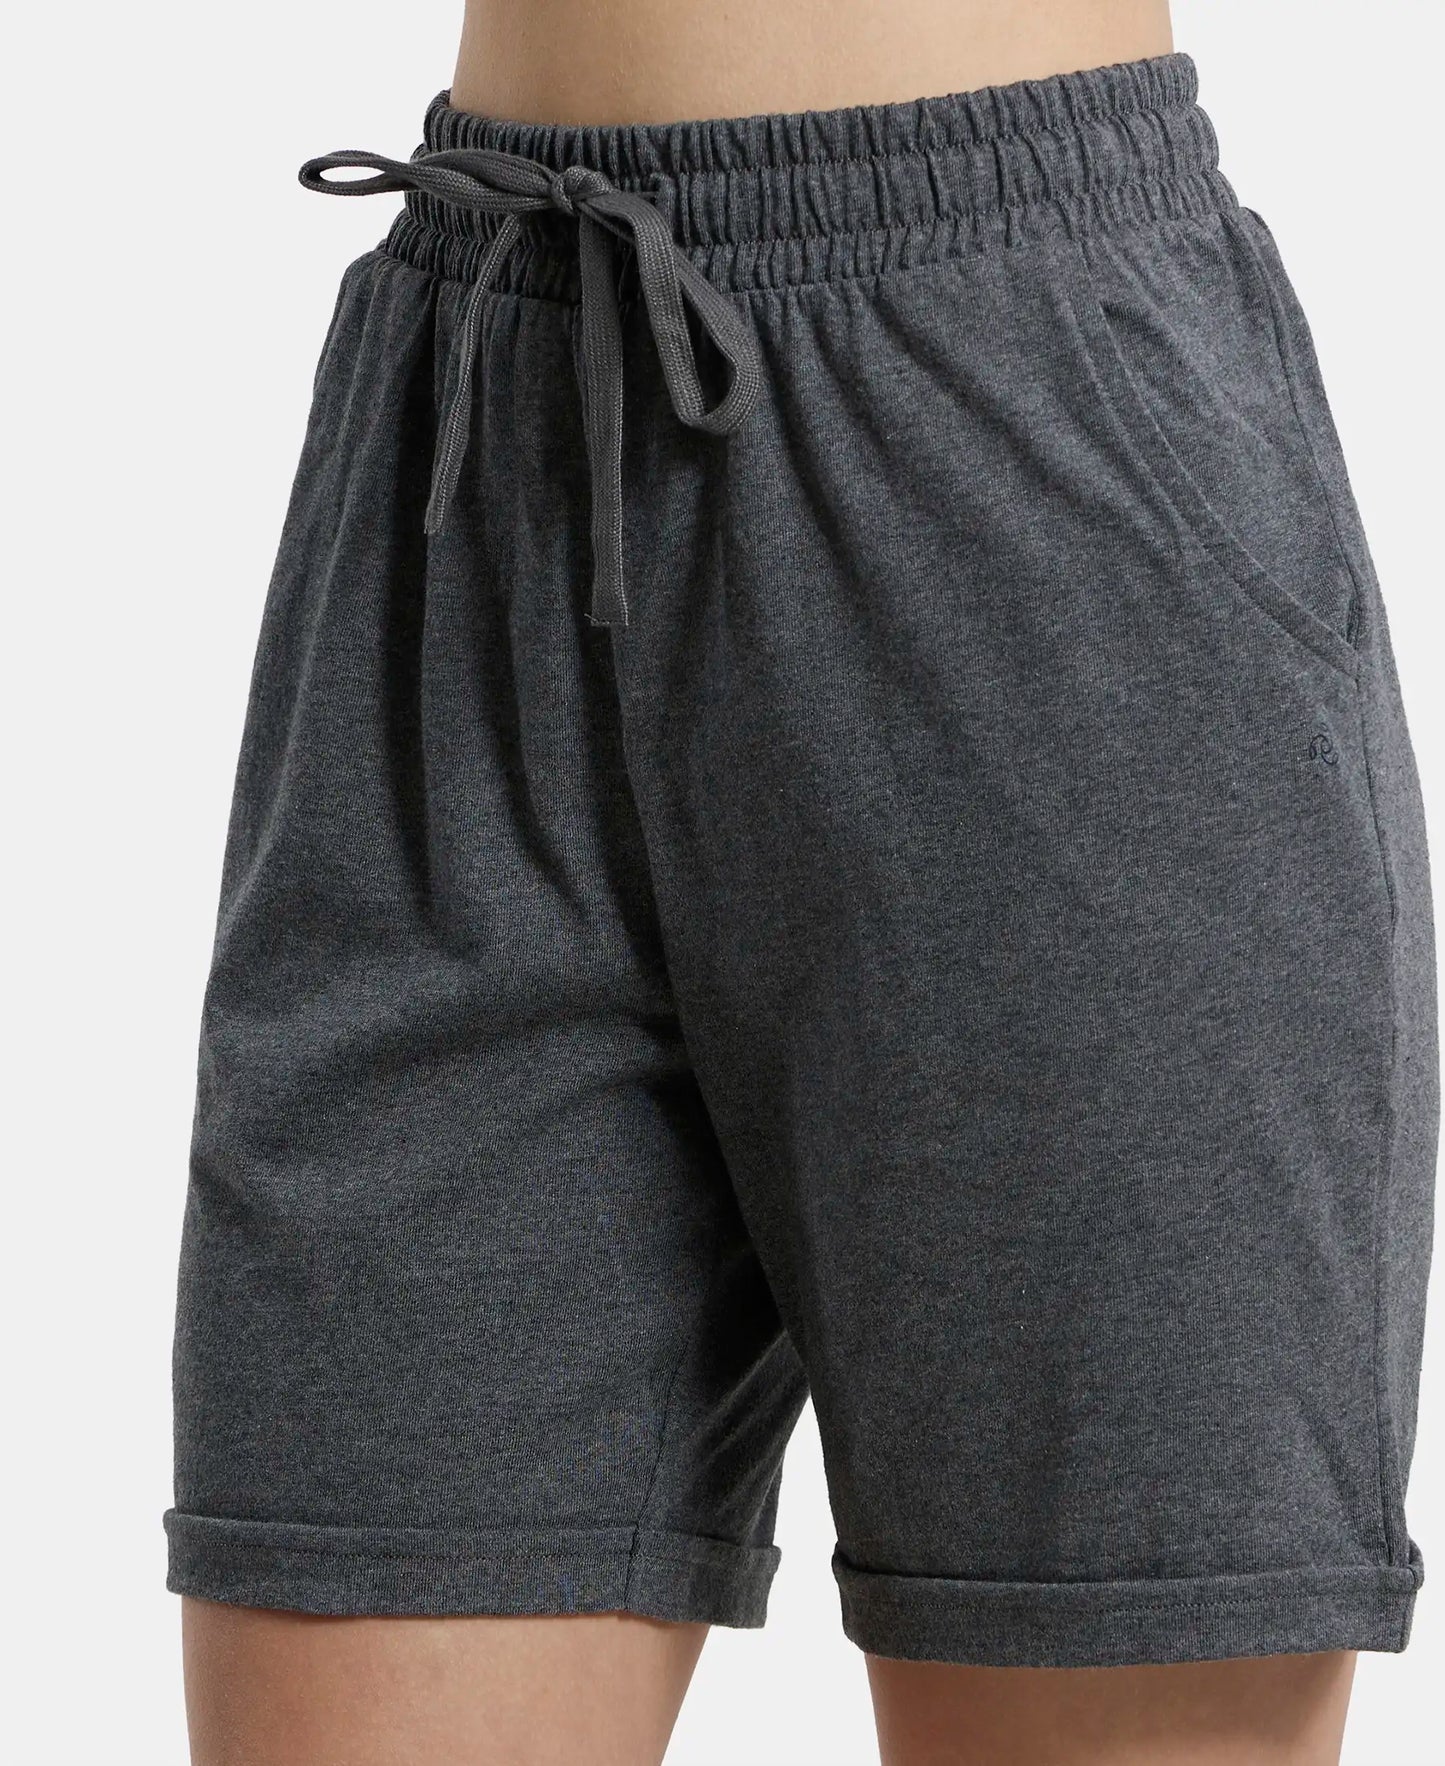 Super Combed Cotton Rich Regular Fit Shorts with Side Pockets - Charcoal Melange-7